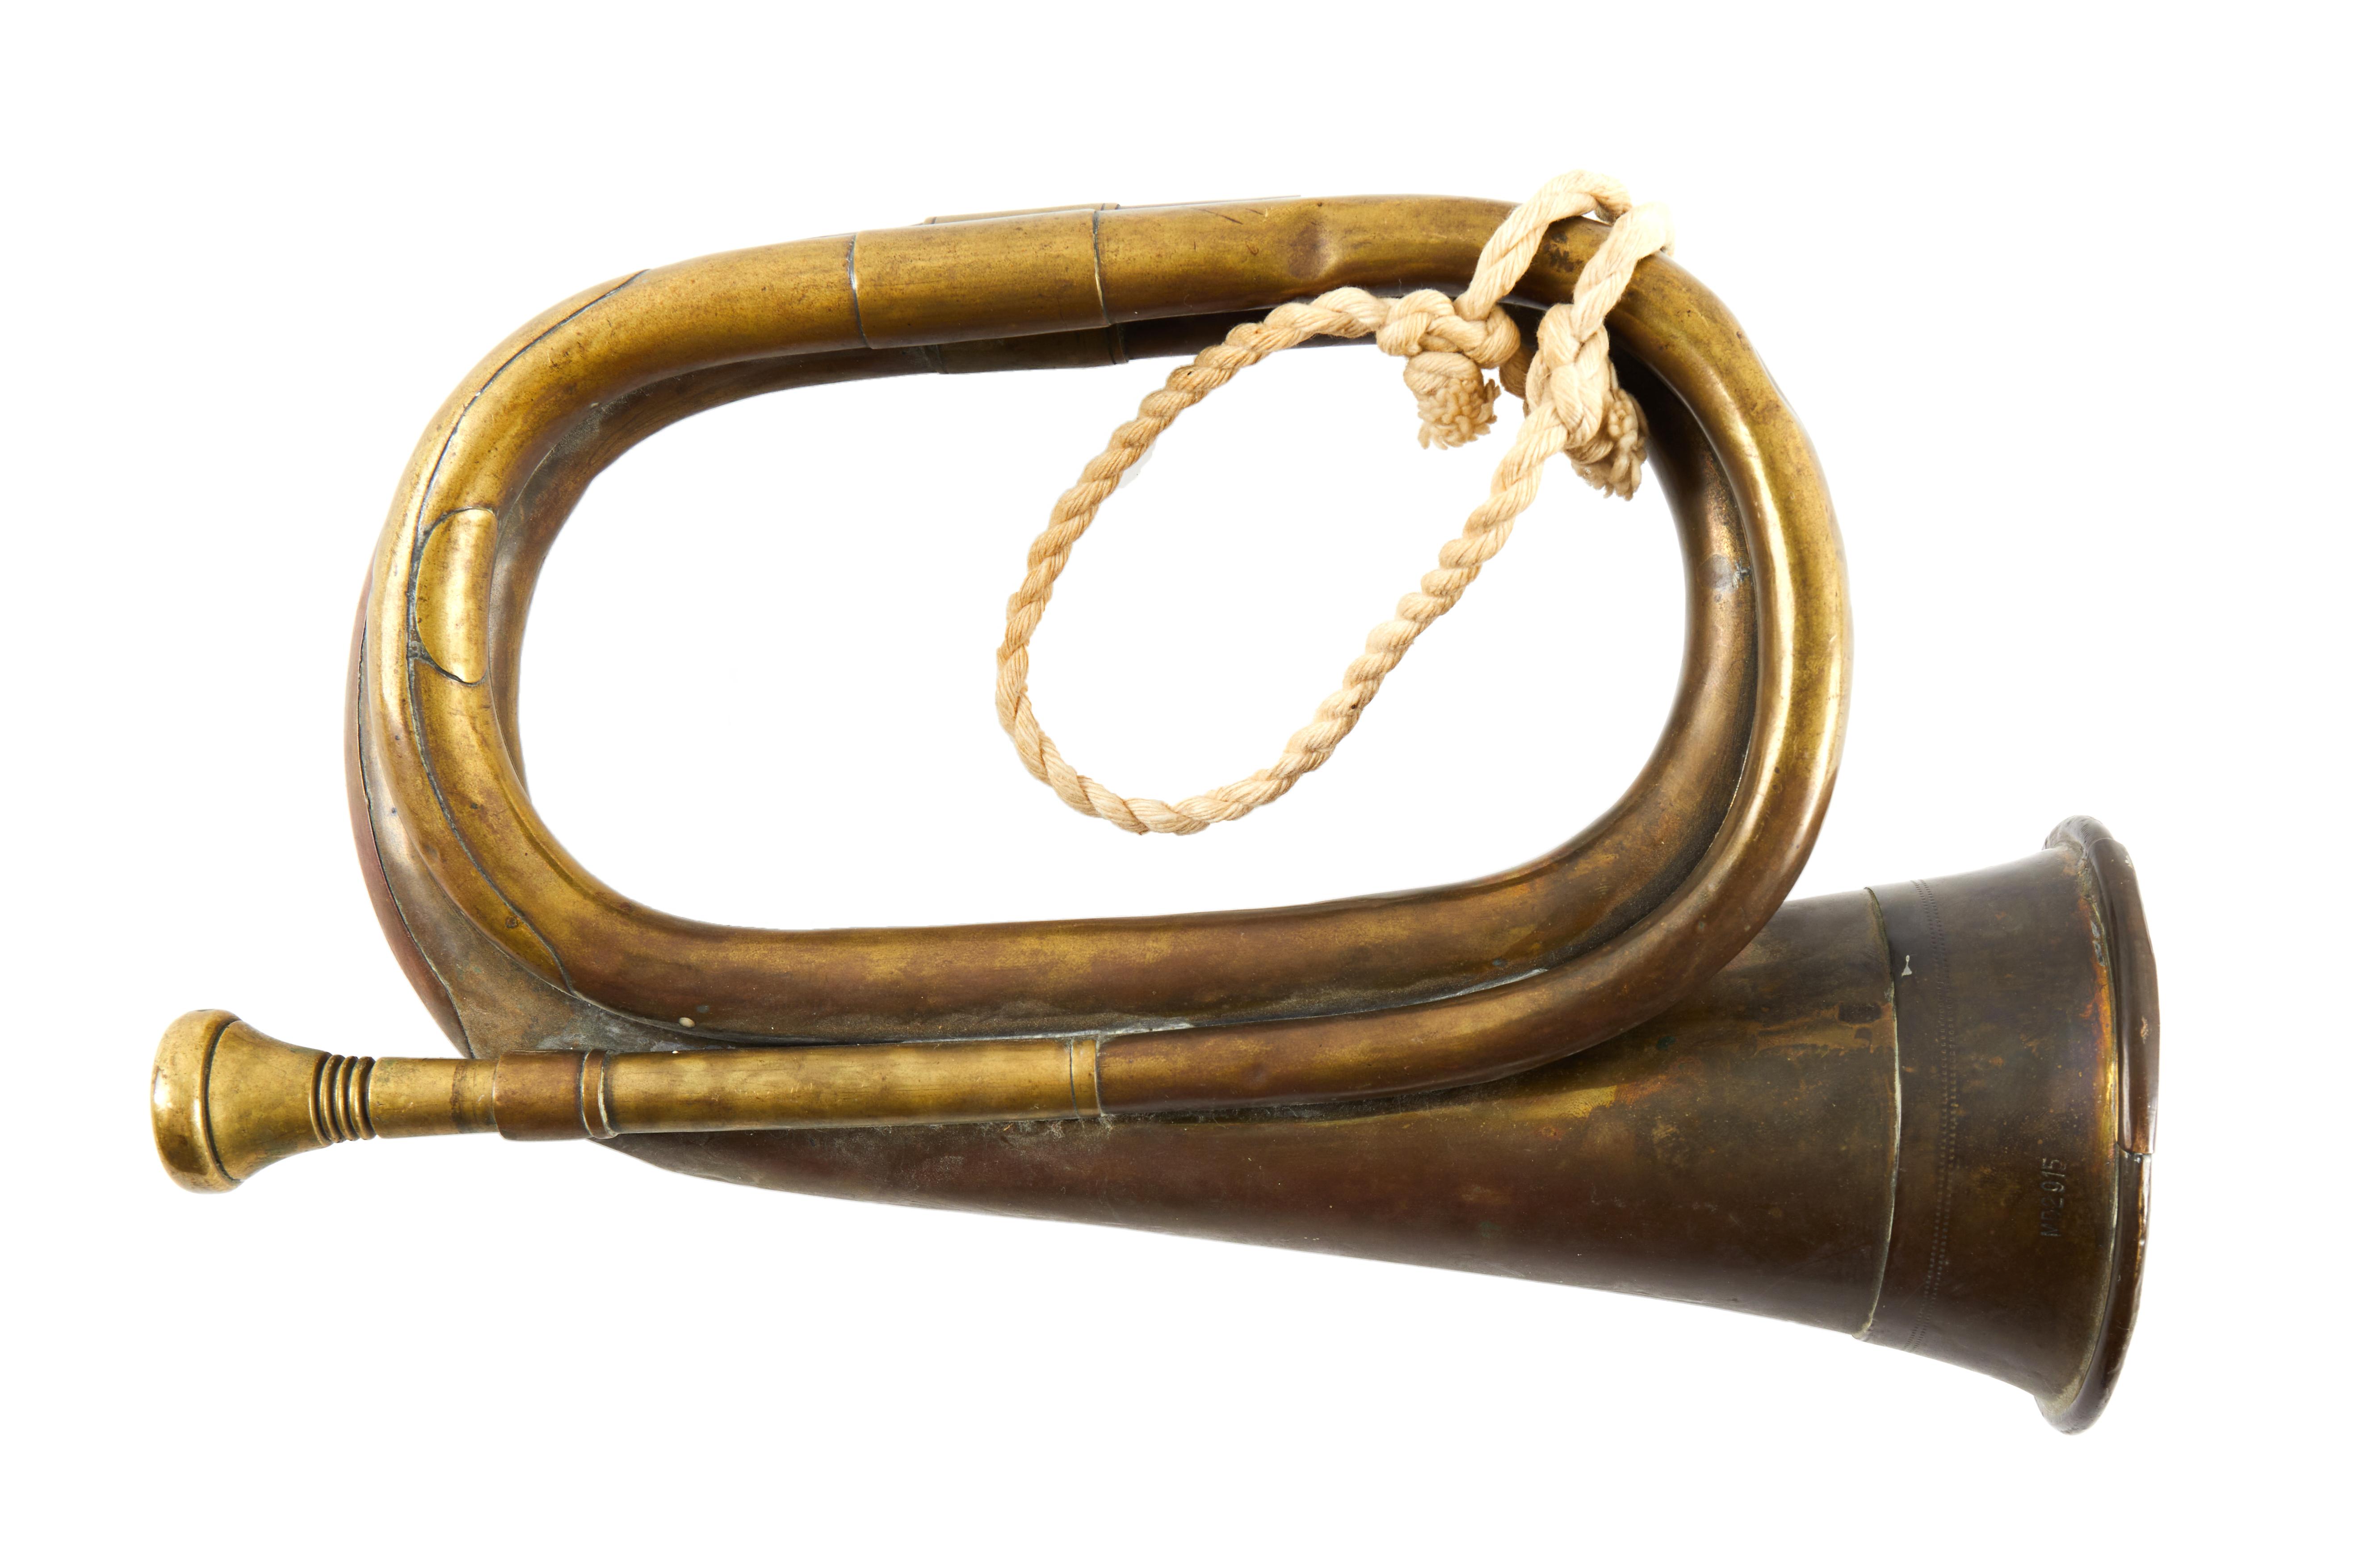 Signalhorn/ bugle